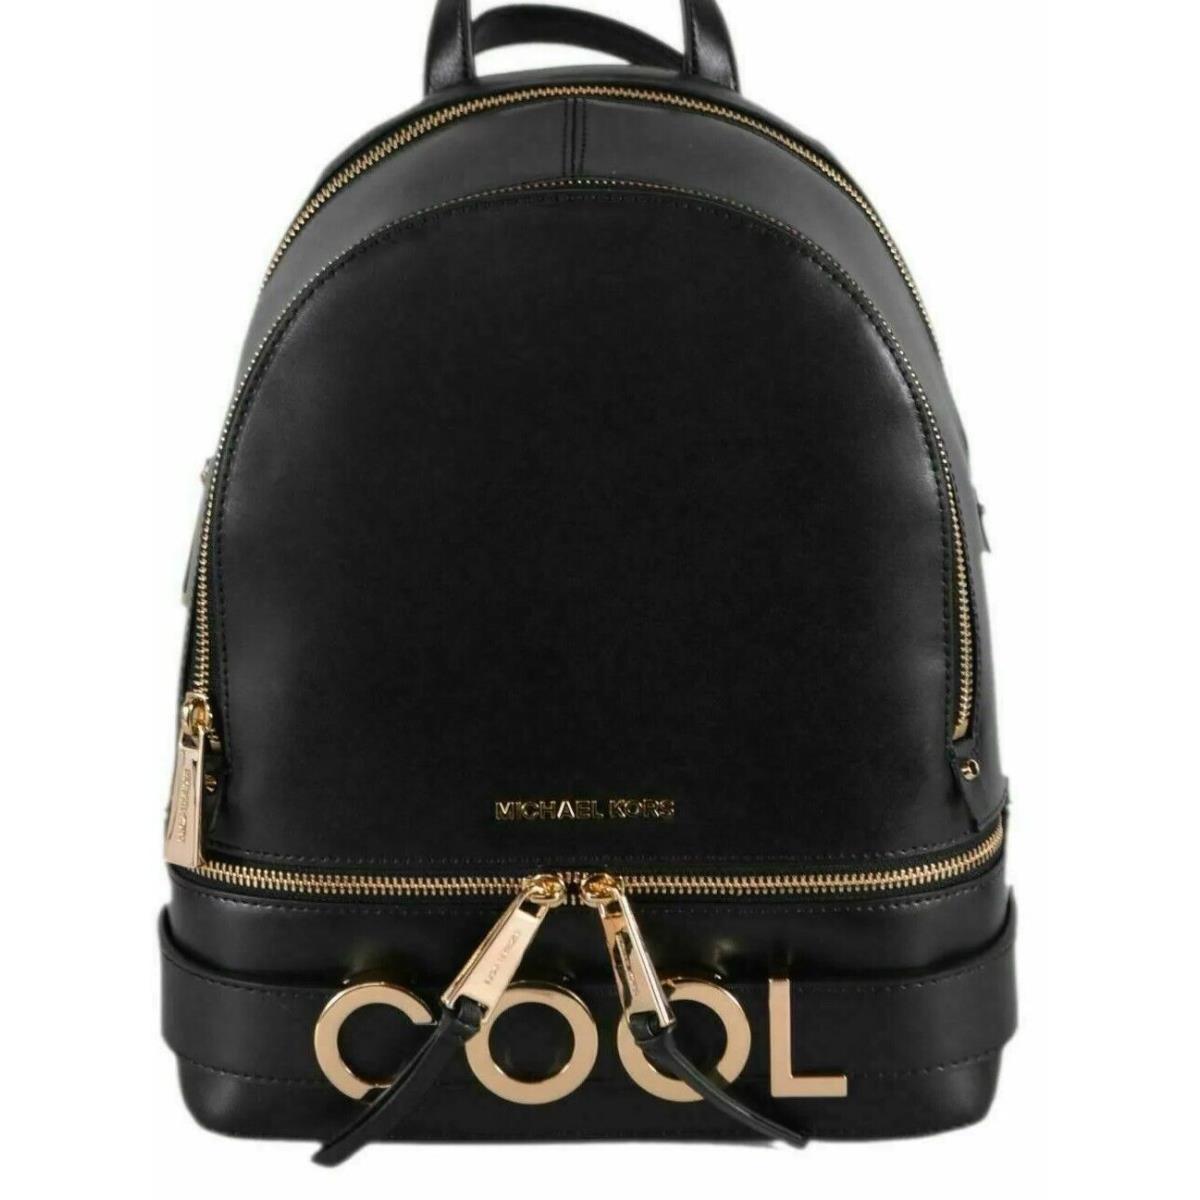 Michael Kors Rhea Zip Black Leather Medium Backpack Rare Unique Cool